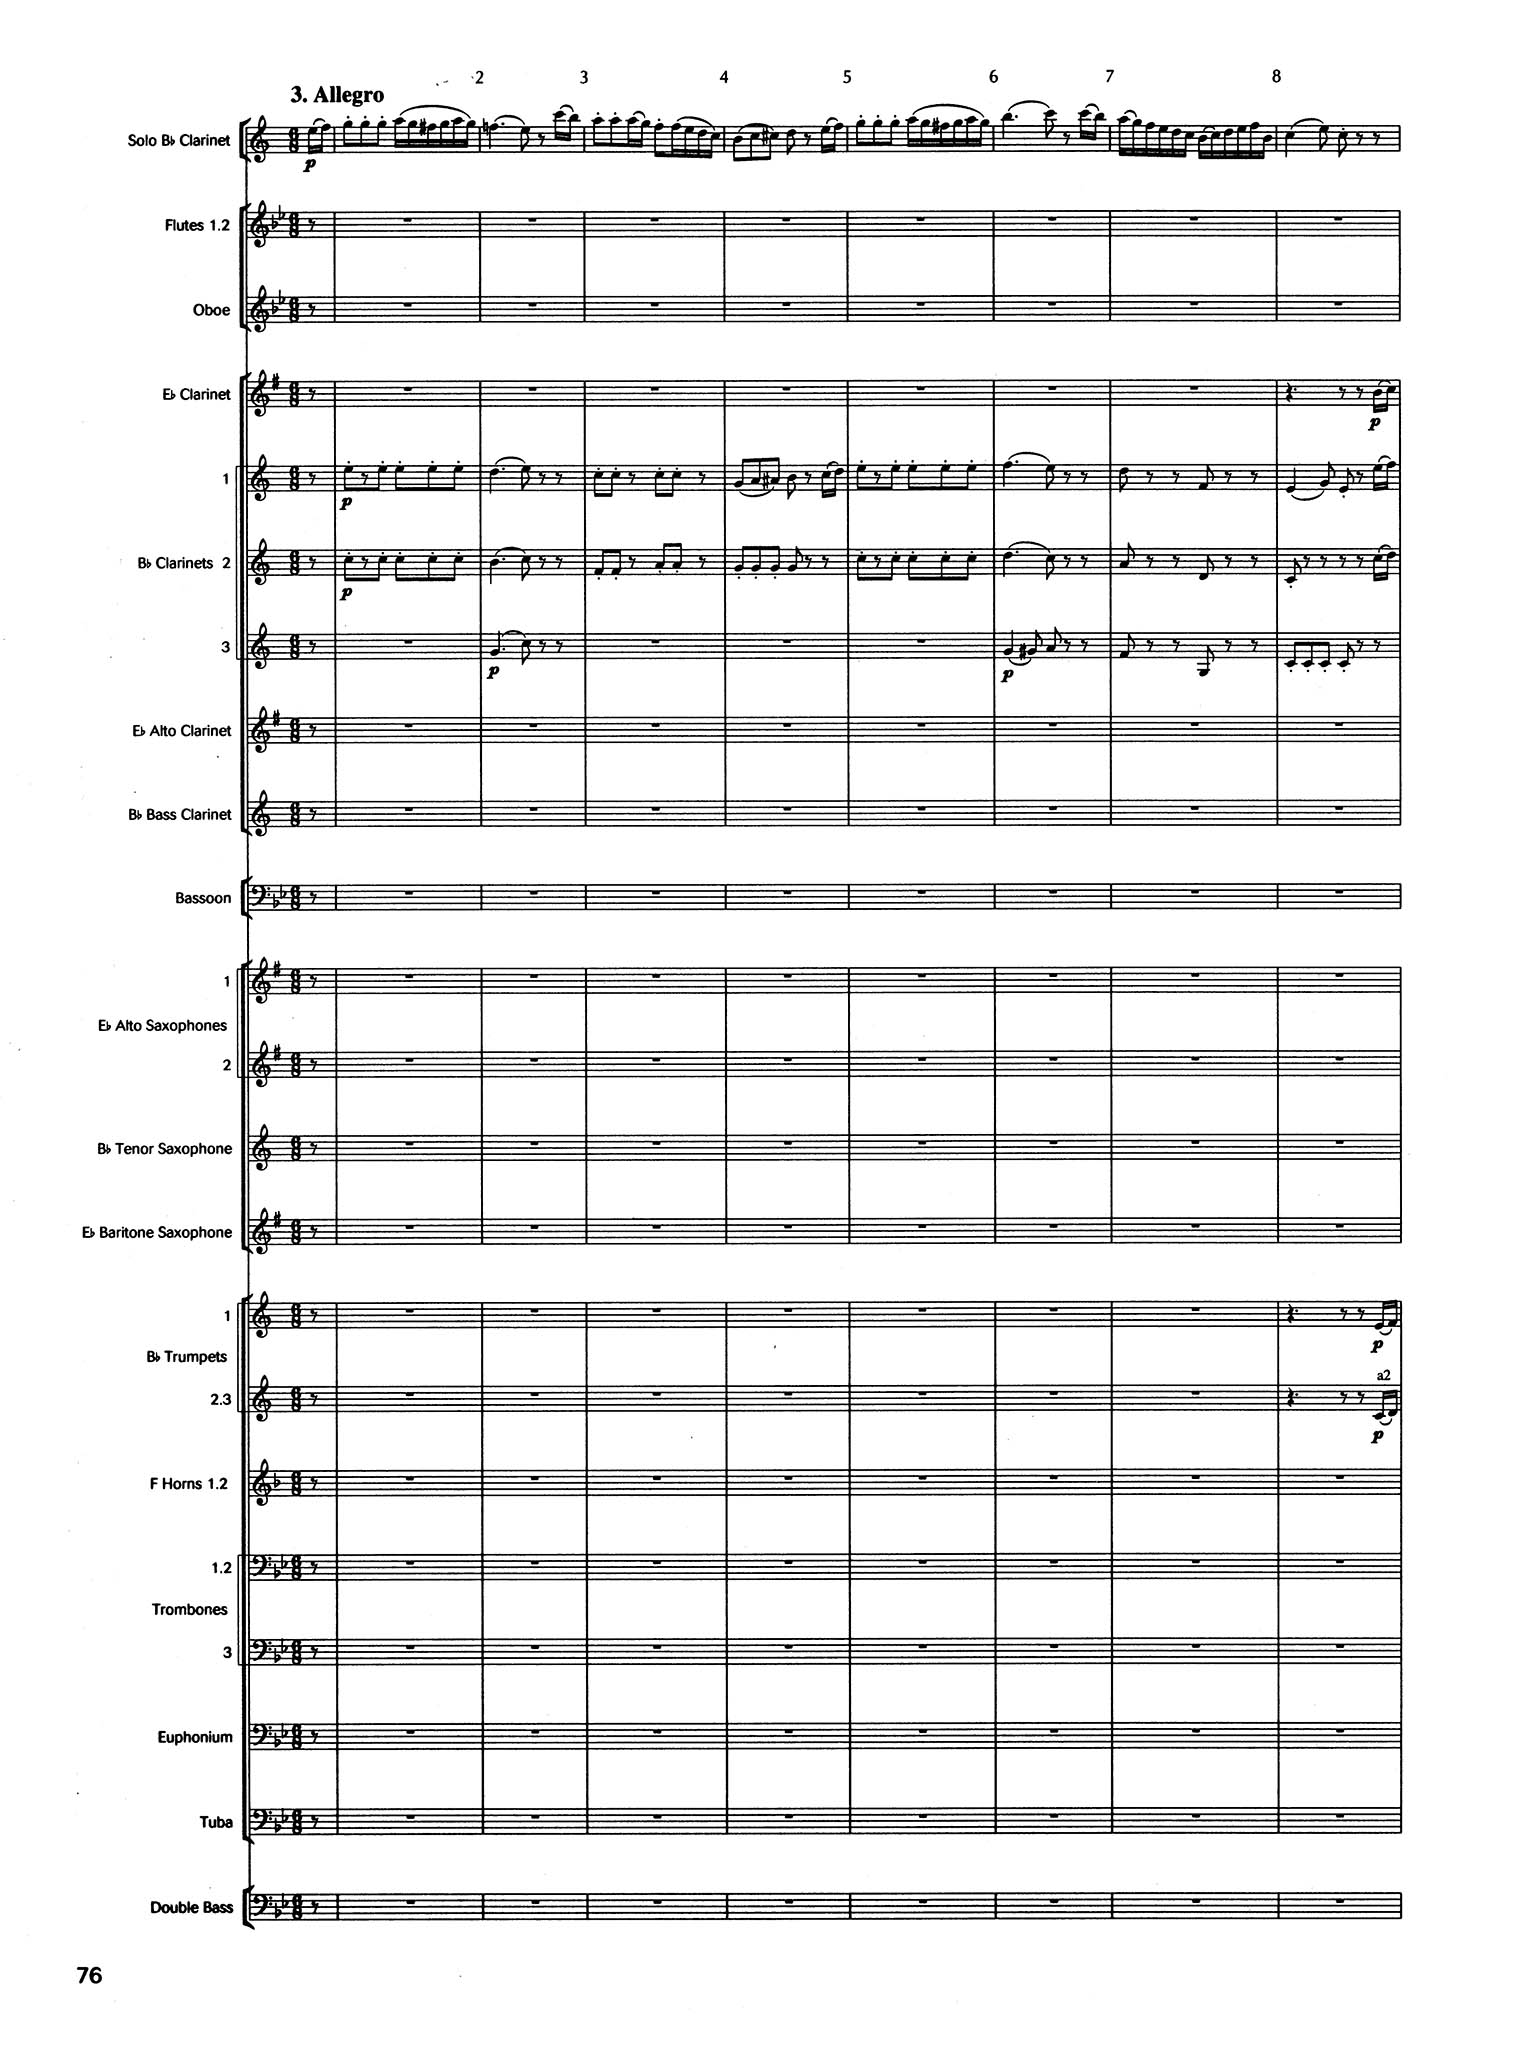 Clarinet Concerto in A Major, K. 622 - Movement 3